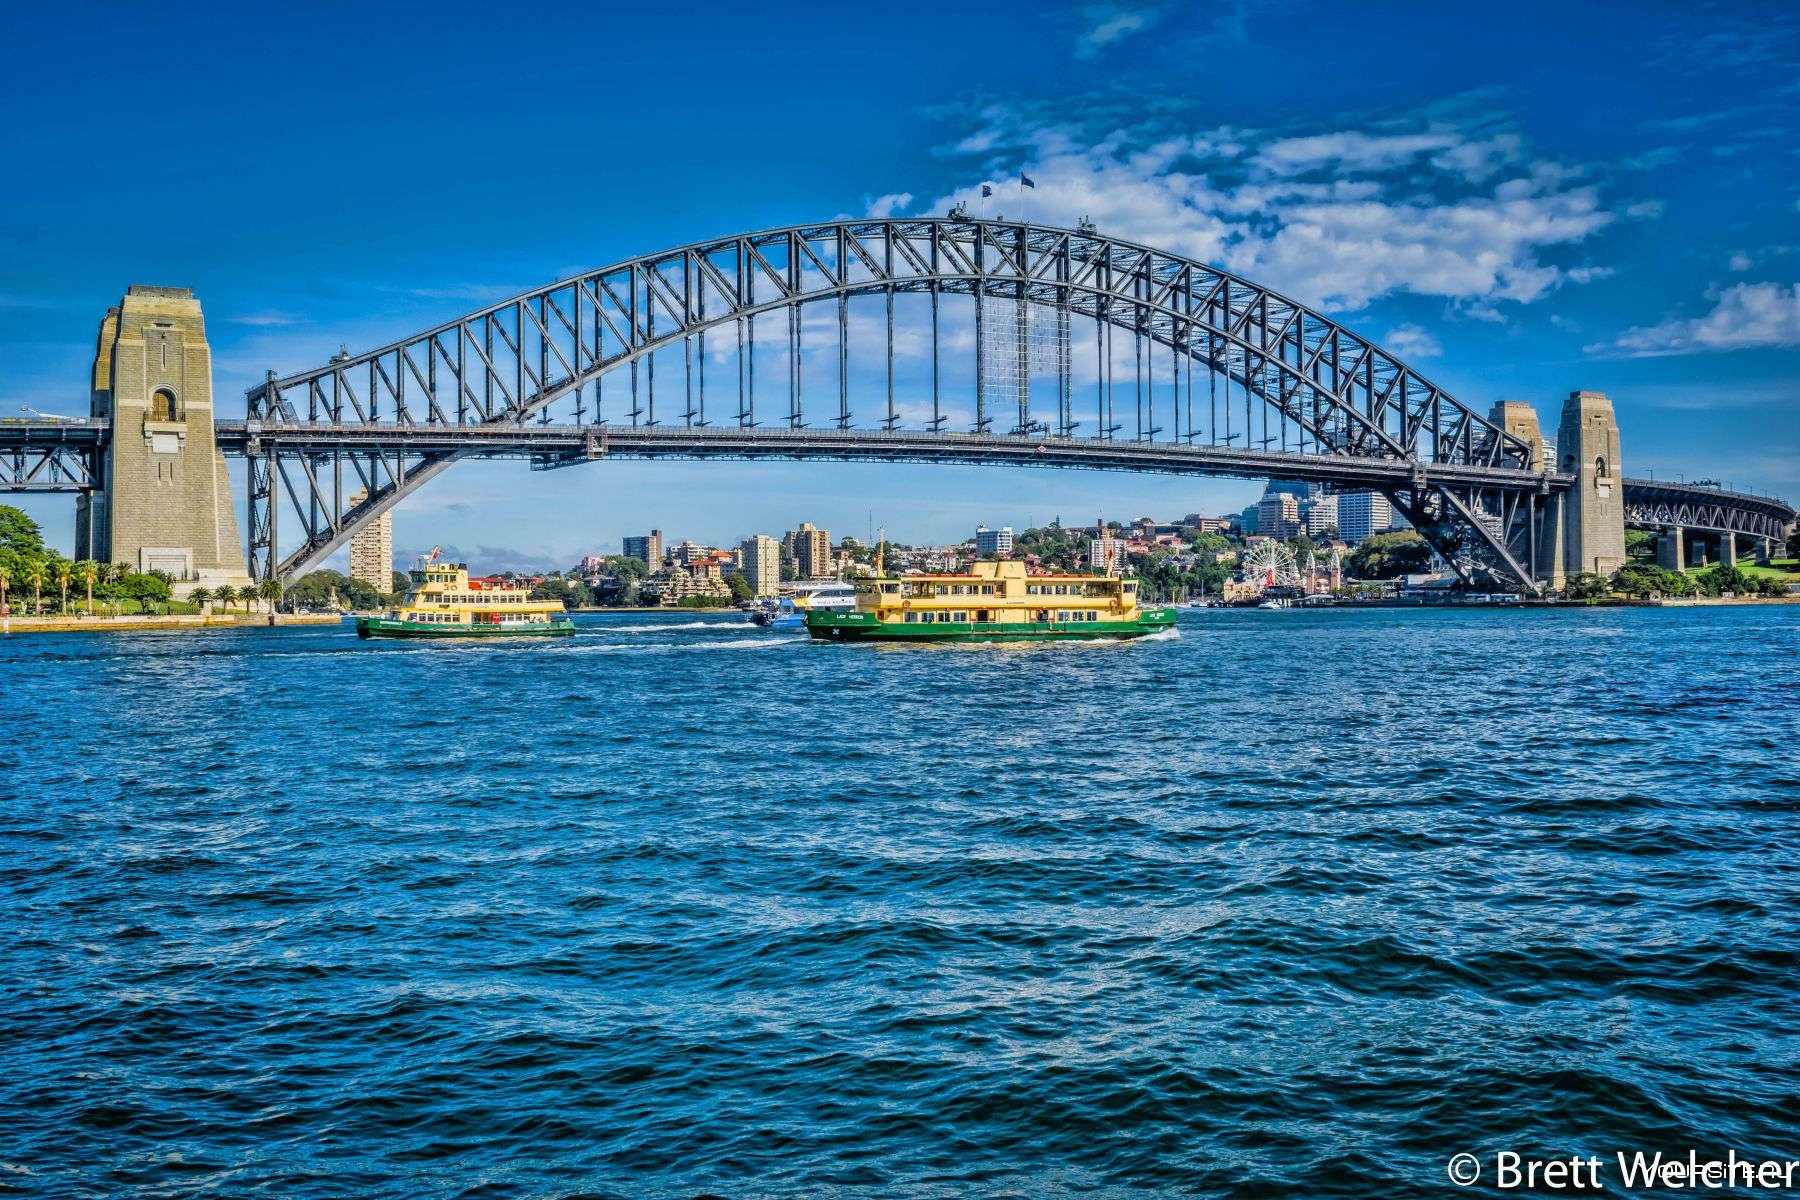 Harbour bridge. Харбор-бридж Сидней. Мост Харбор-бридж в Сиднее. Мост Харбор бридж в Австралии. Харбор-бридж (Сидней, Австралия).